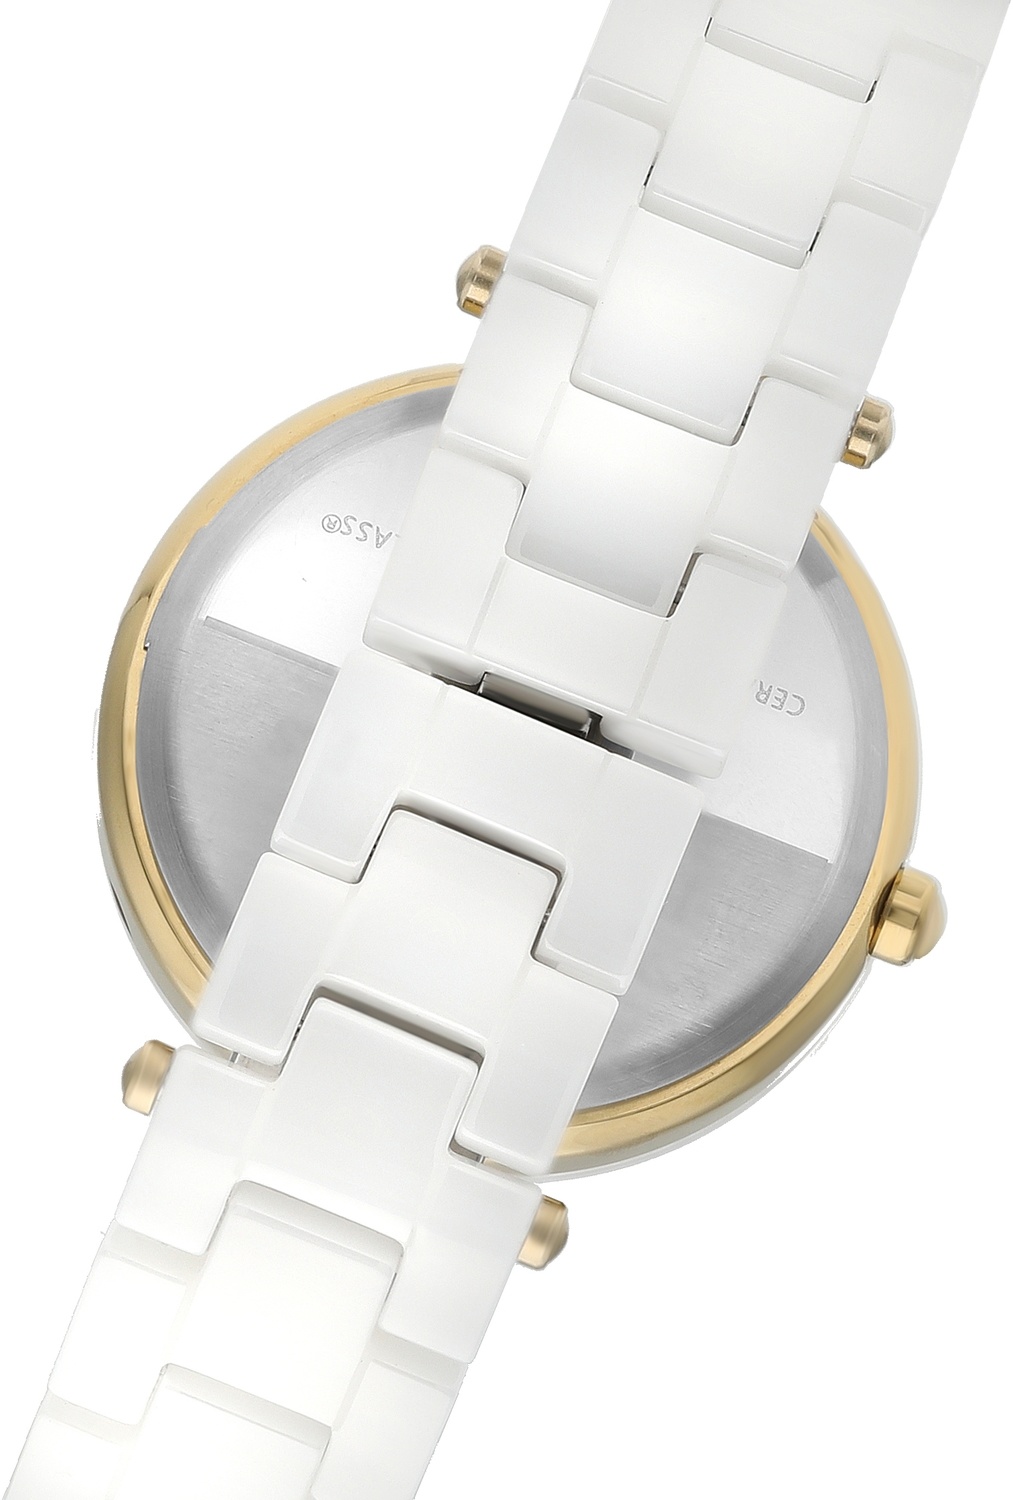 BEVERLY HILLS POLO CLUB  Женские часы, кварцевый механизм, керамика, 34 мм